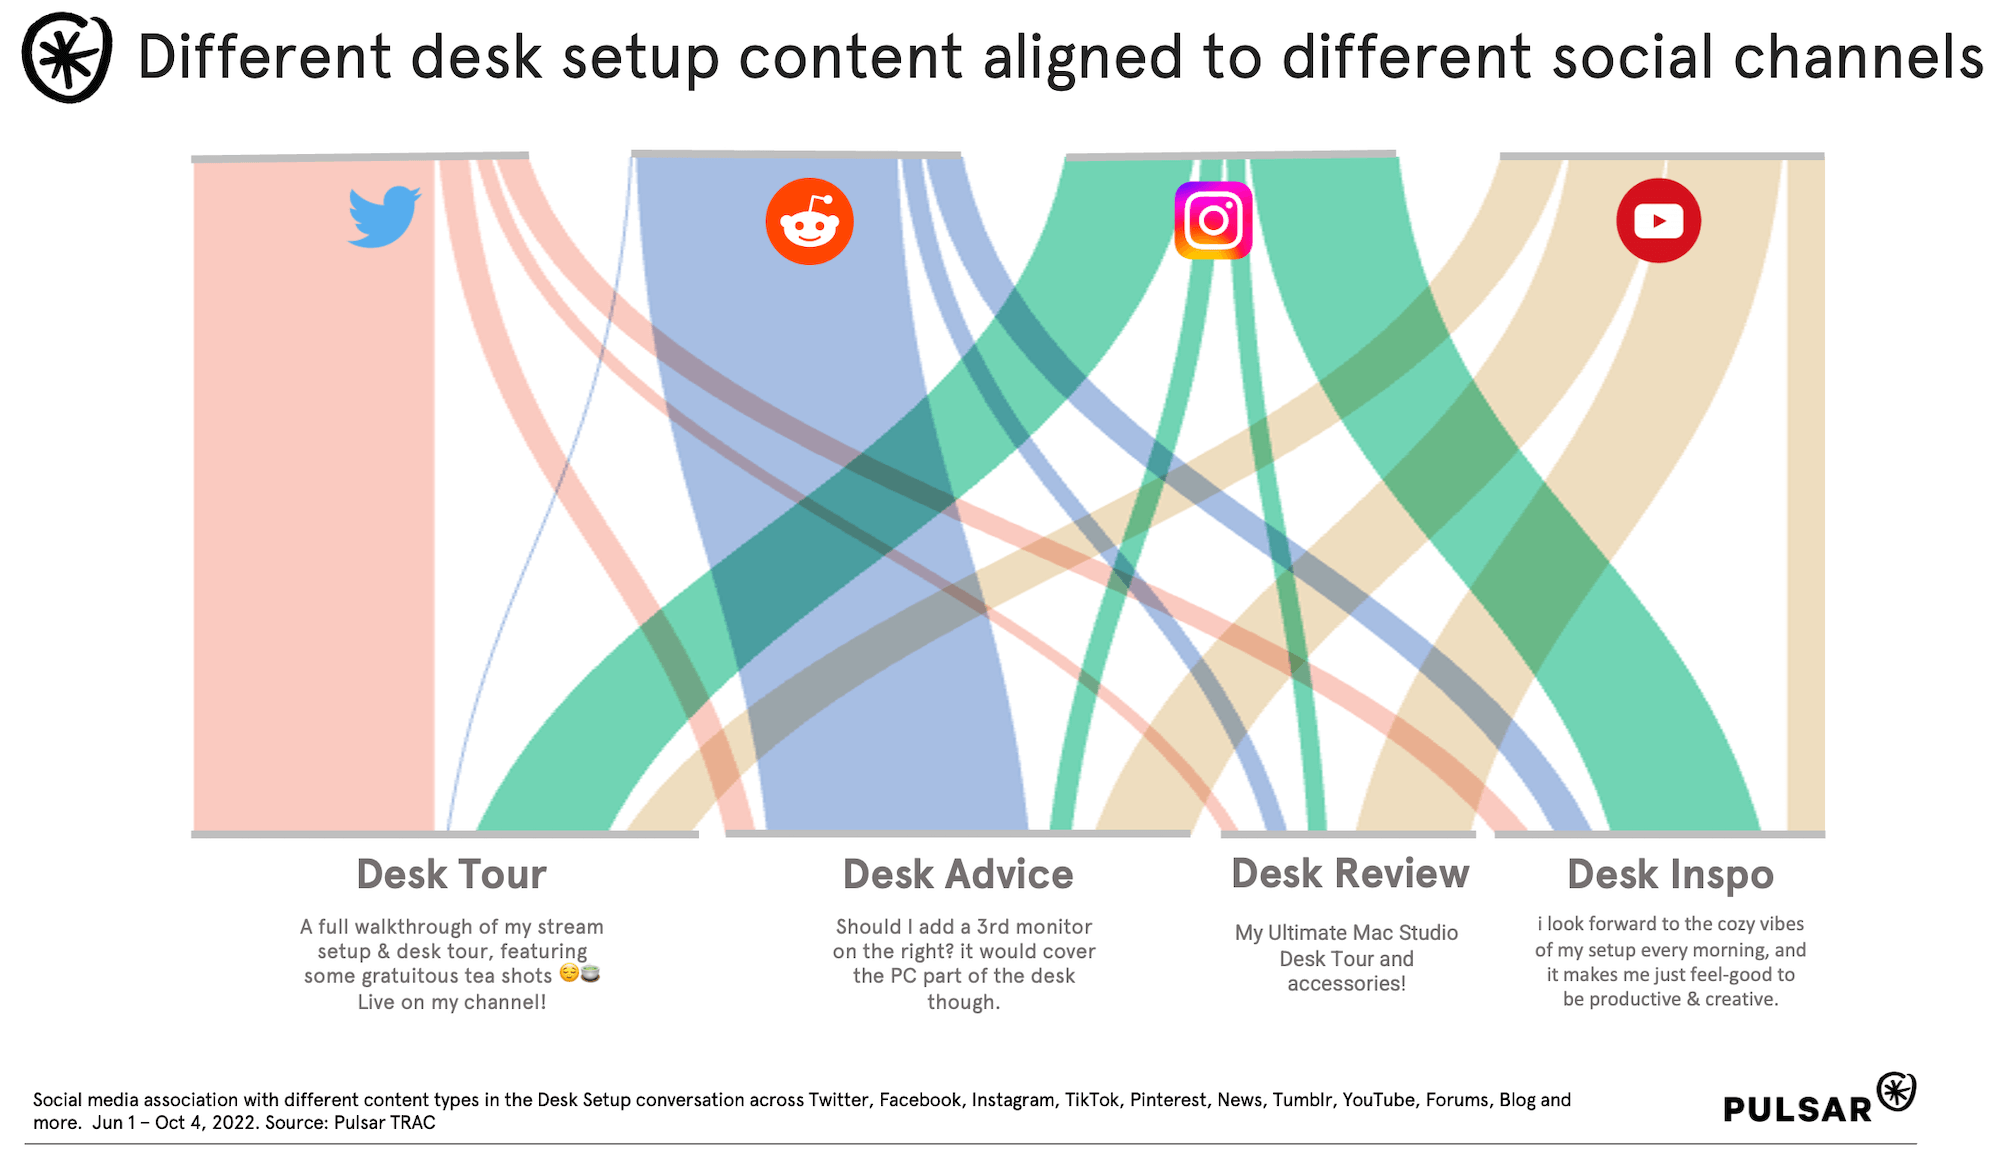 Different Desk Setup contents dominate different social media